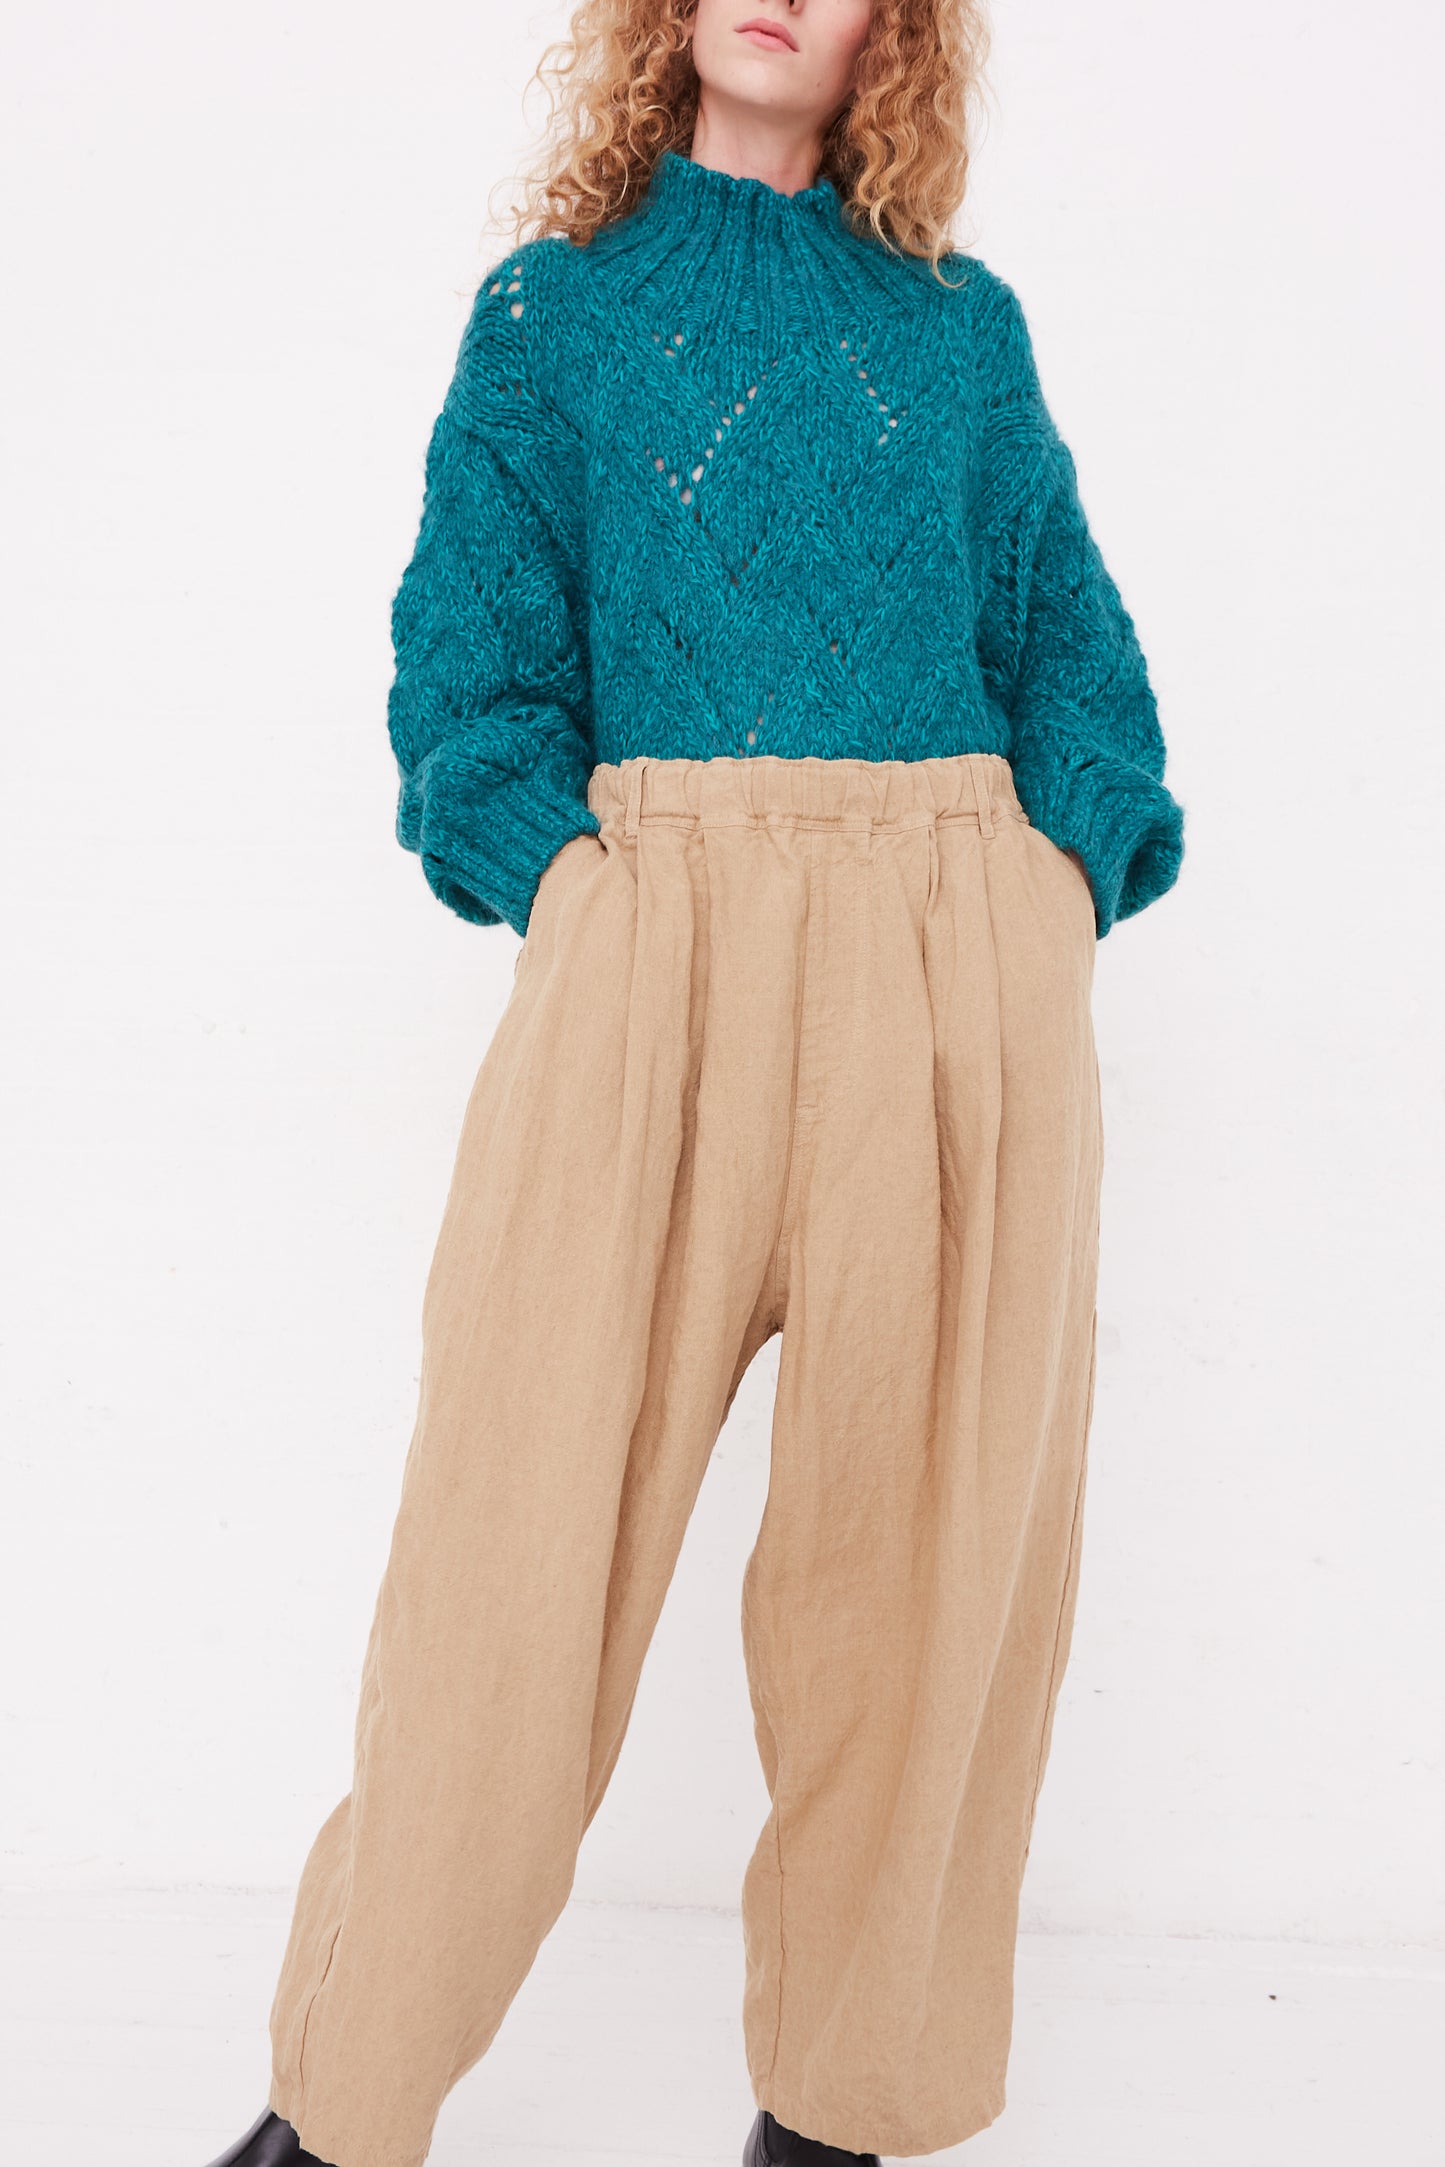 A model wearing Ichi Antiquités' Linen Canvas Pants in Beige pants in a teal sweater.